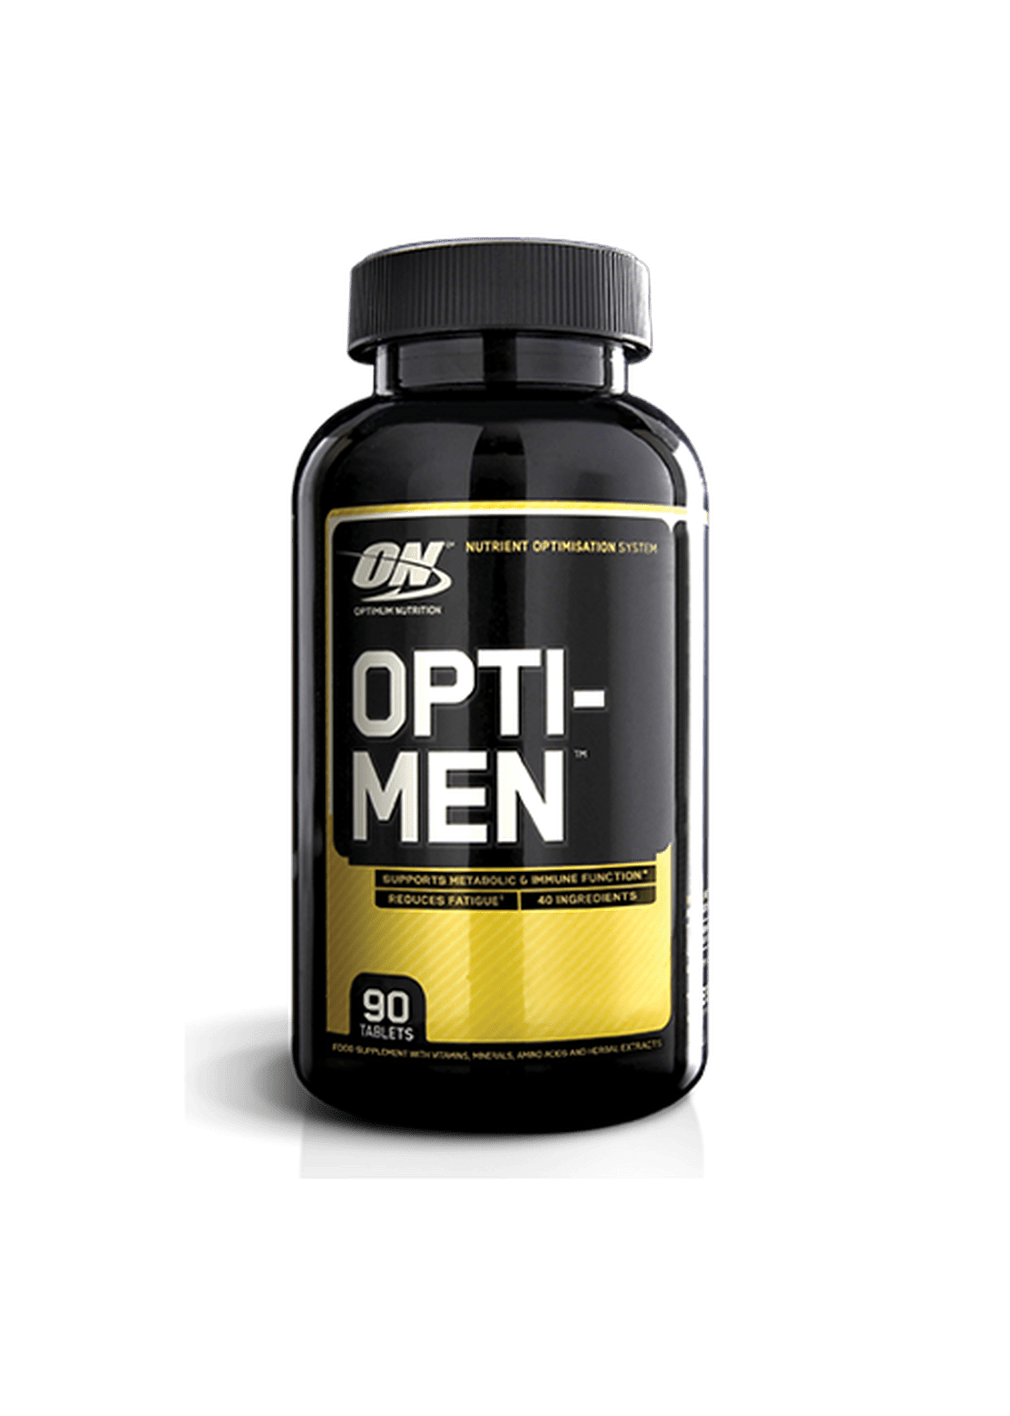 Buy Optimum Nutrition OPTI–MEN Multivitamin Tablets In All Over Lahore Pakistan 2021, Opti-Men 90 Tablets Price In Pakistan, www.arnutrition.pk iS The Best Food Supplements Store